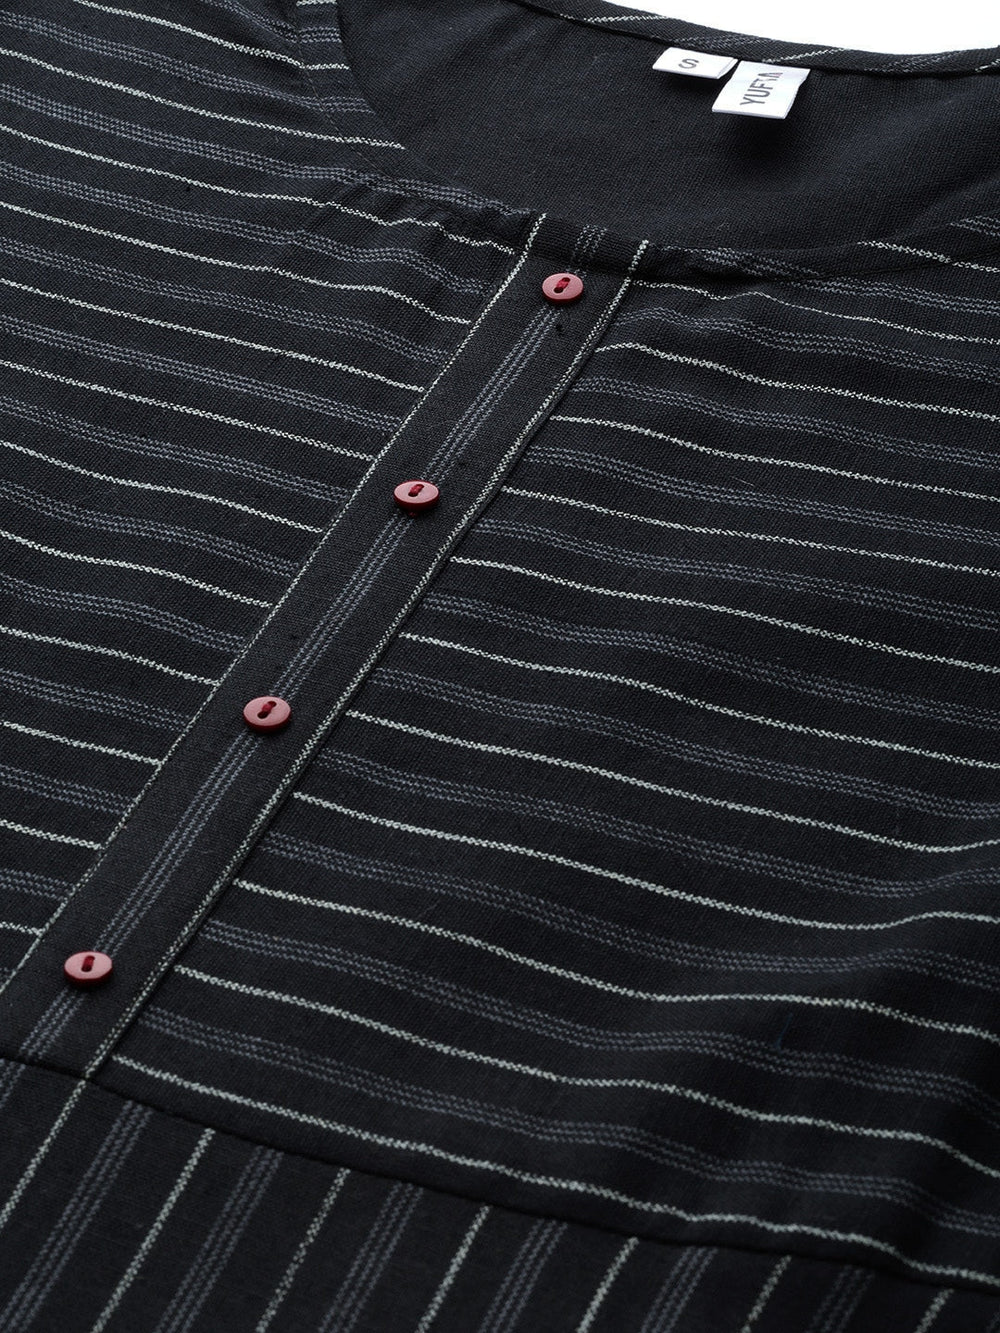 Black & Off White Striped Woven A-Line Dress-Yufta Store-7338KURBKSS